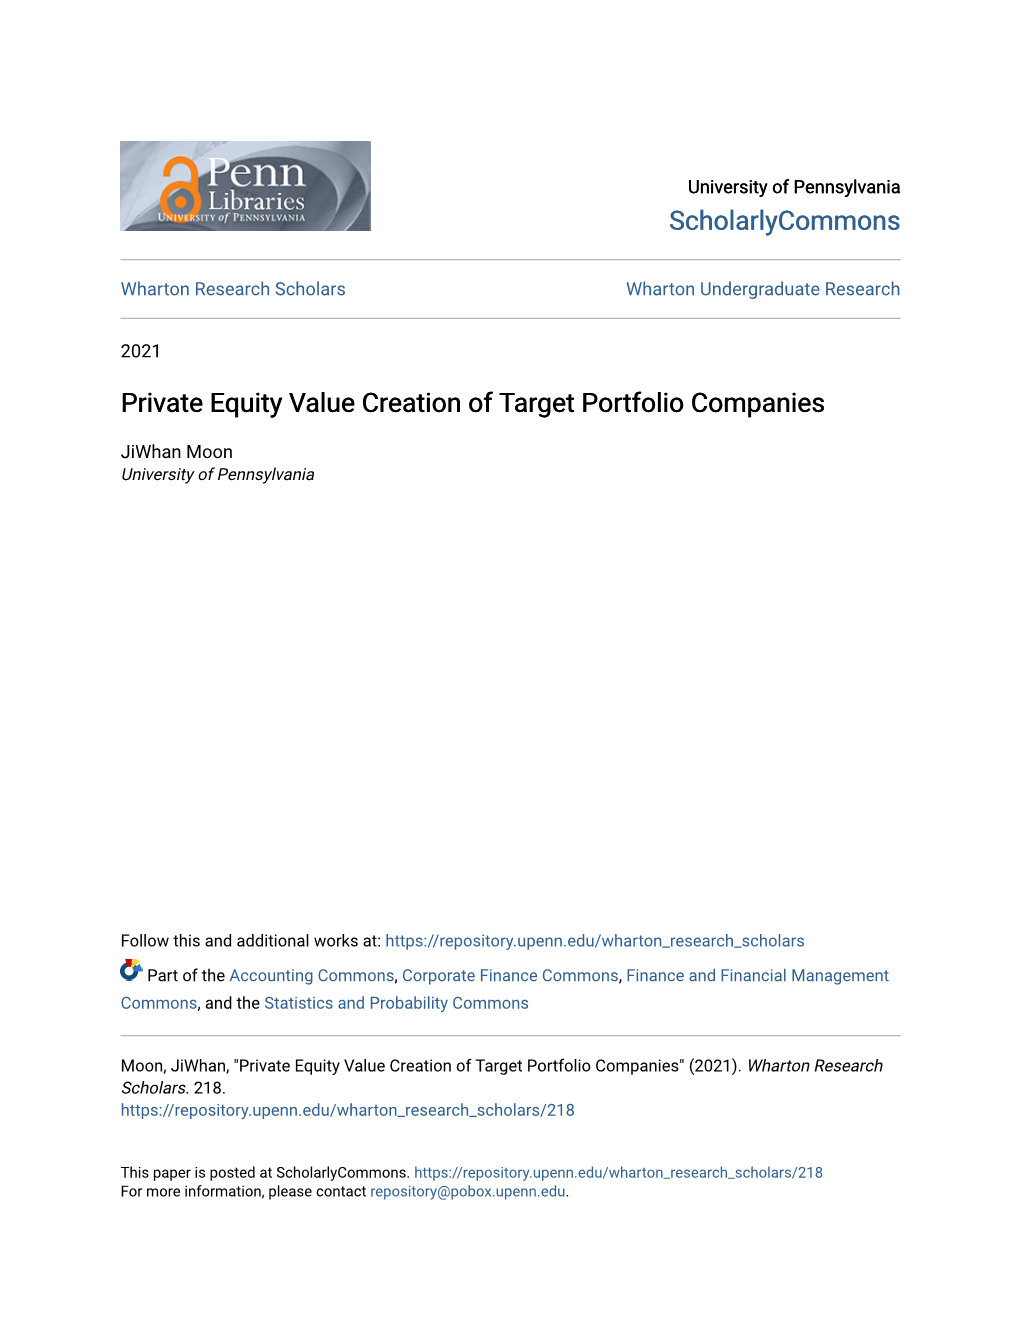 Private Equity Value Creation of Target Portfolio Companies